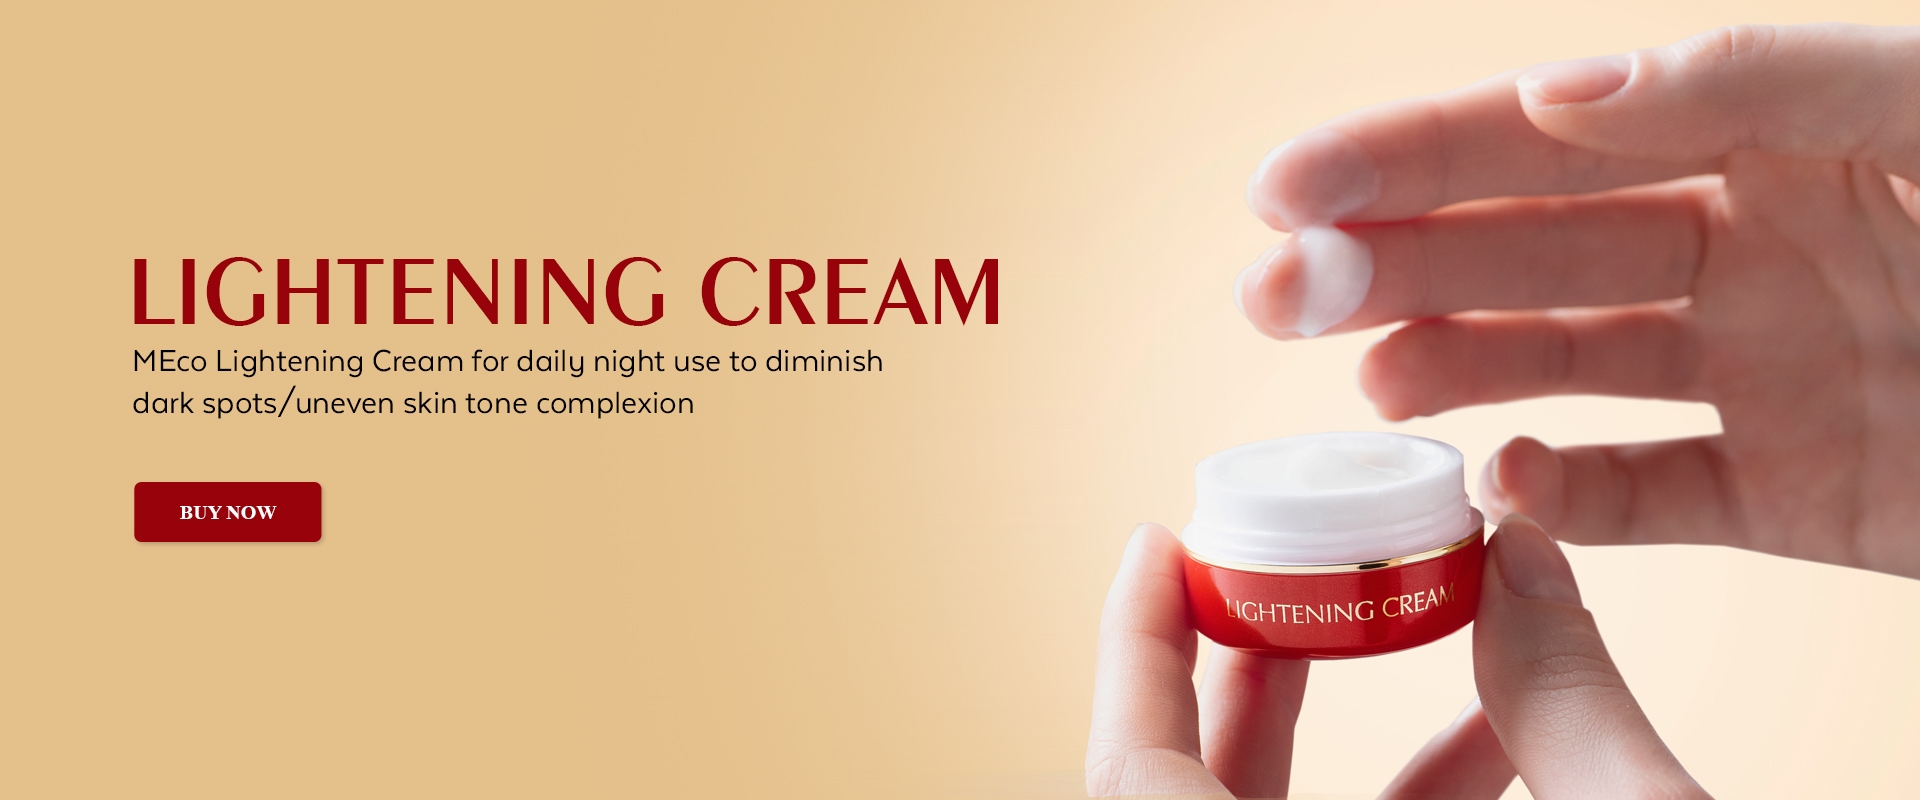 Meco Lightening Cream